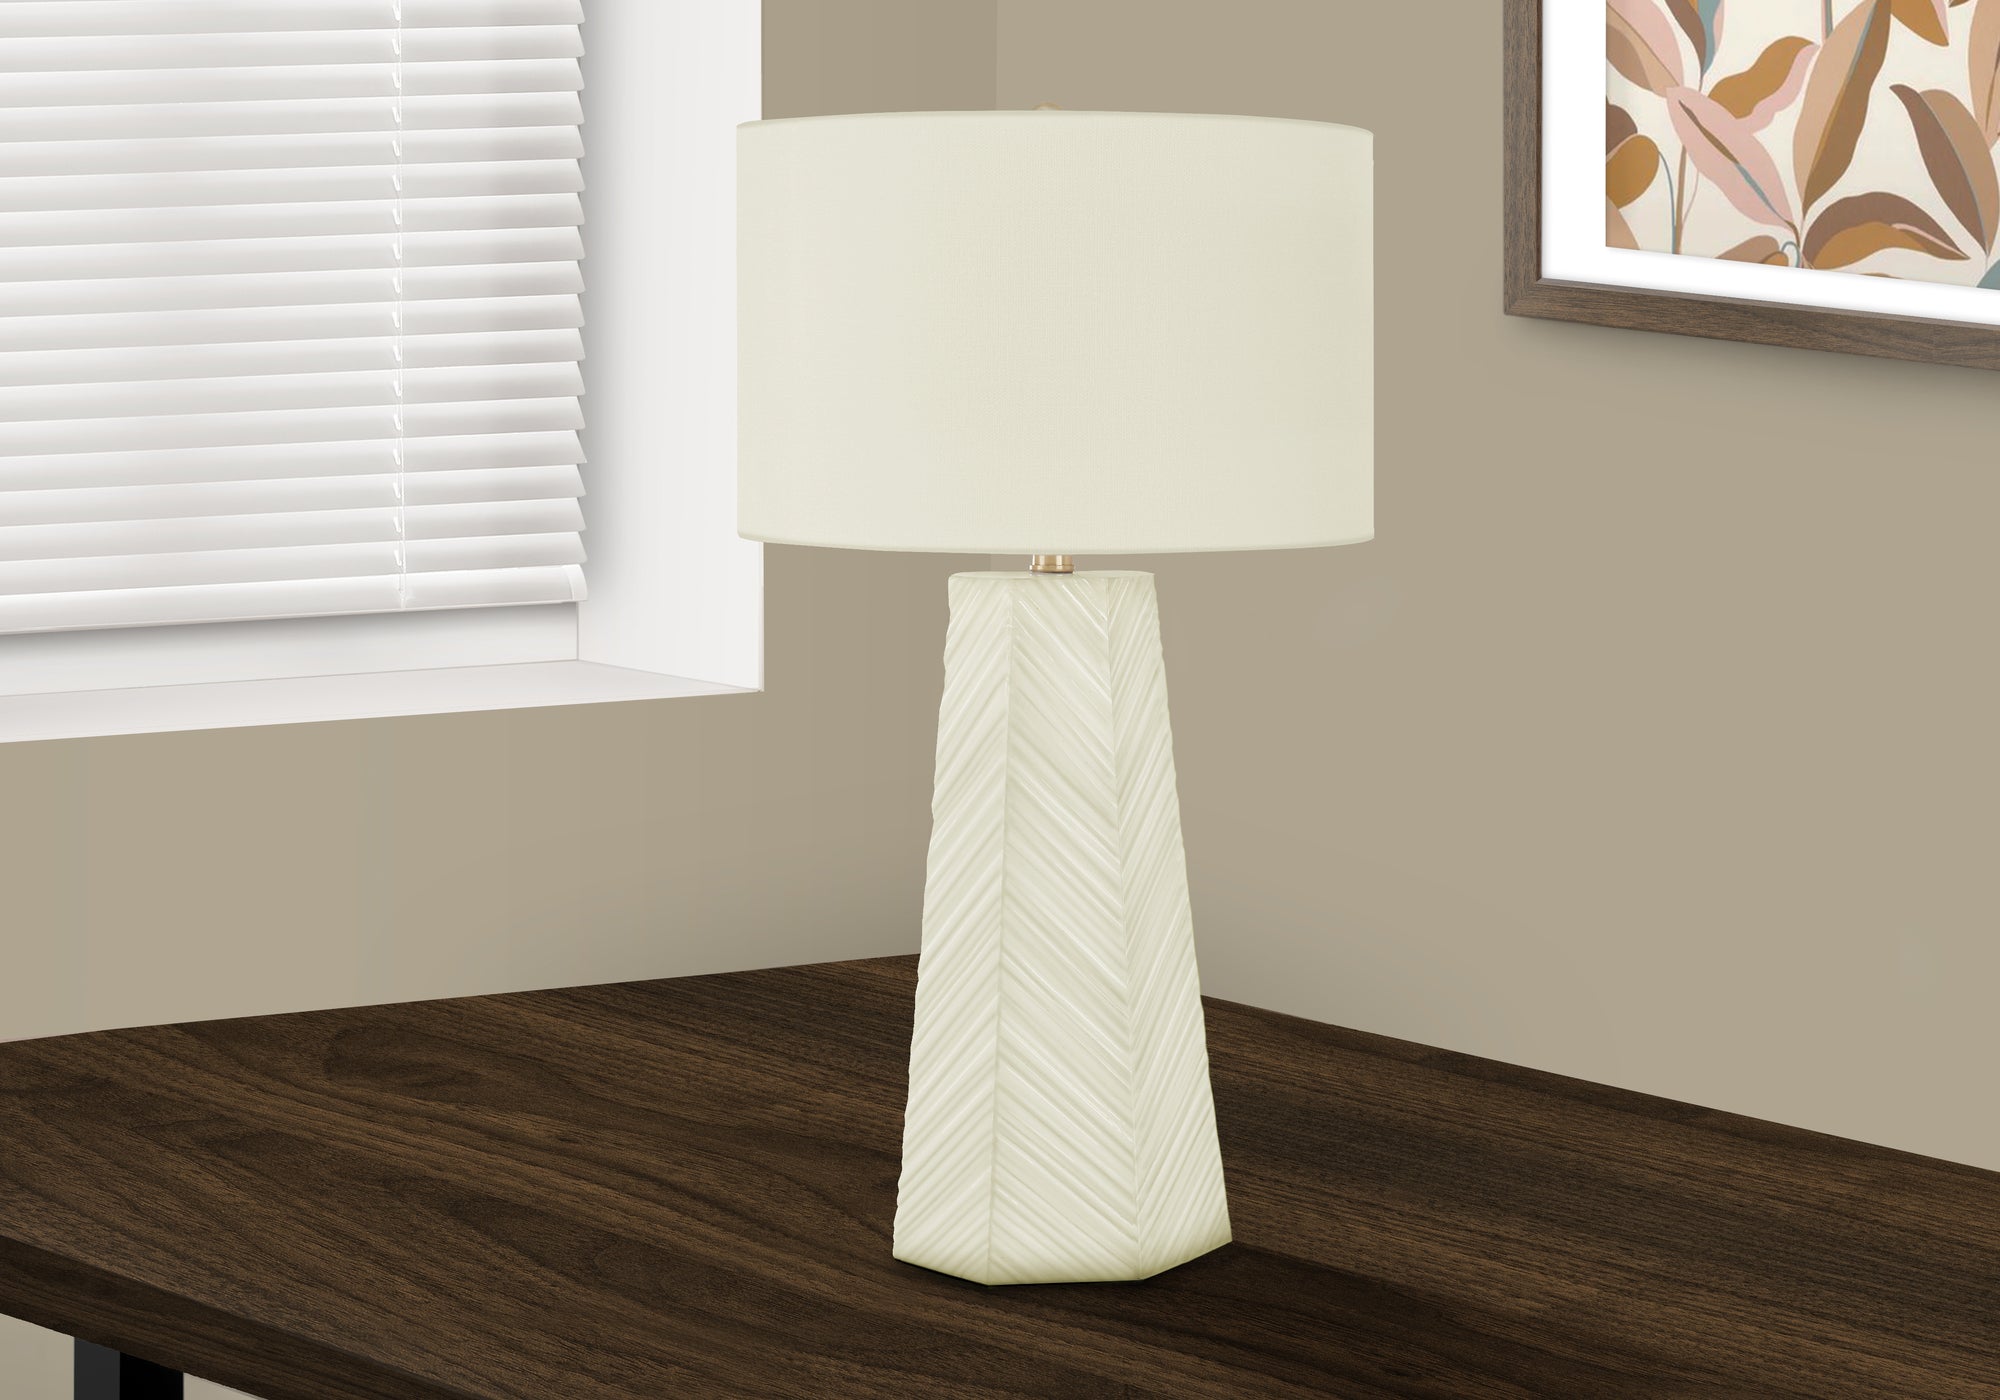 MN-889614    Lighting, 29"H, Table Lamp, White Ceramic, Ivory / Cream Shade, Contemporary